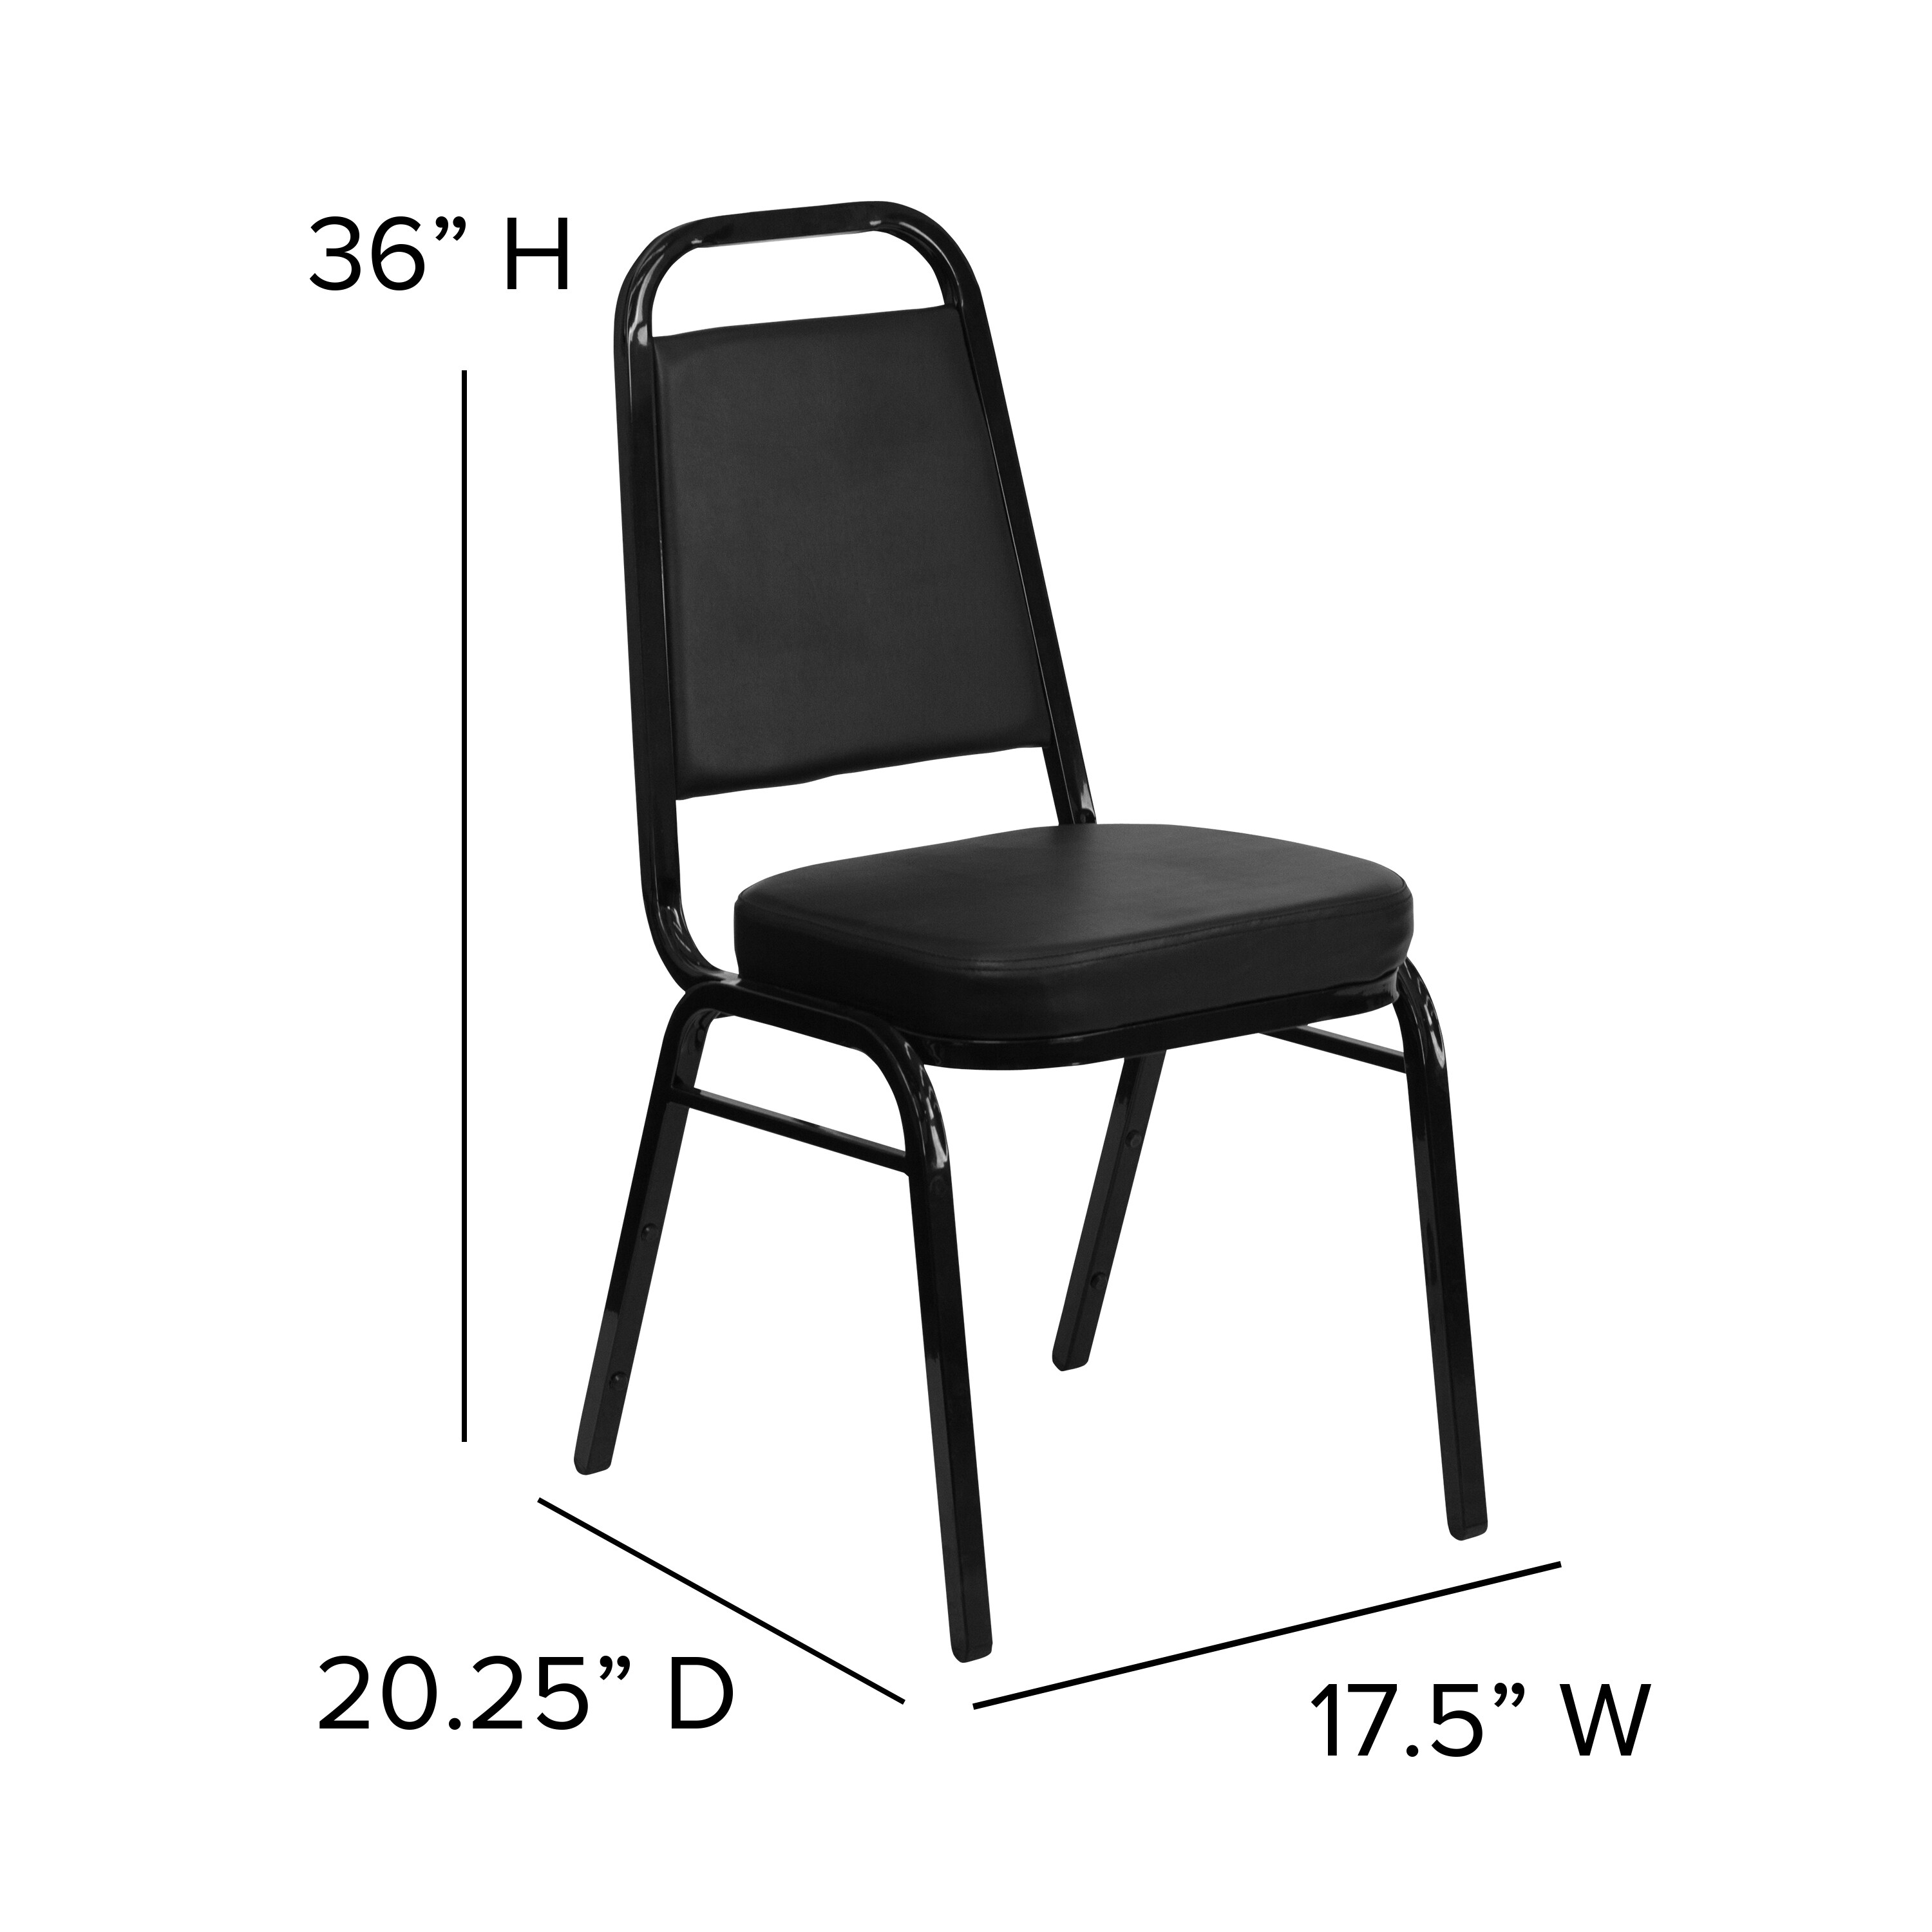 15.5 Black Upholstery Chiavari Firm Chair Cushion at christmas.com